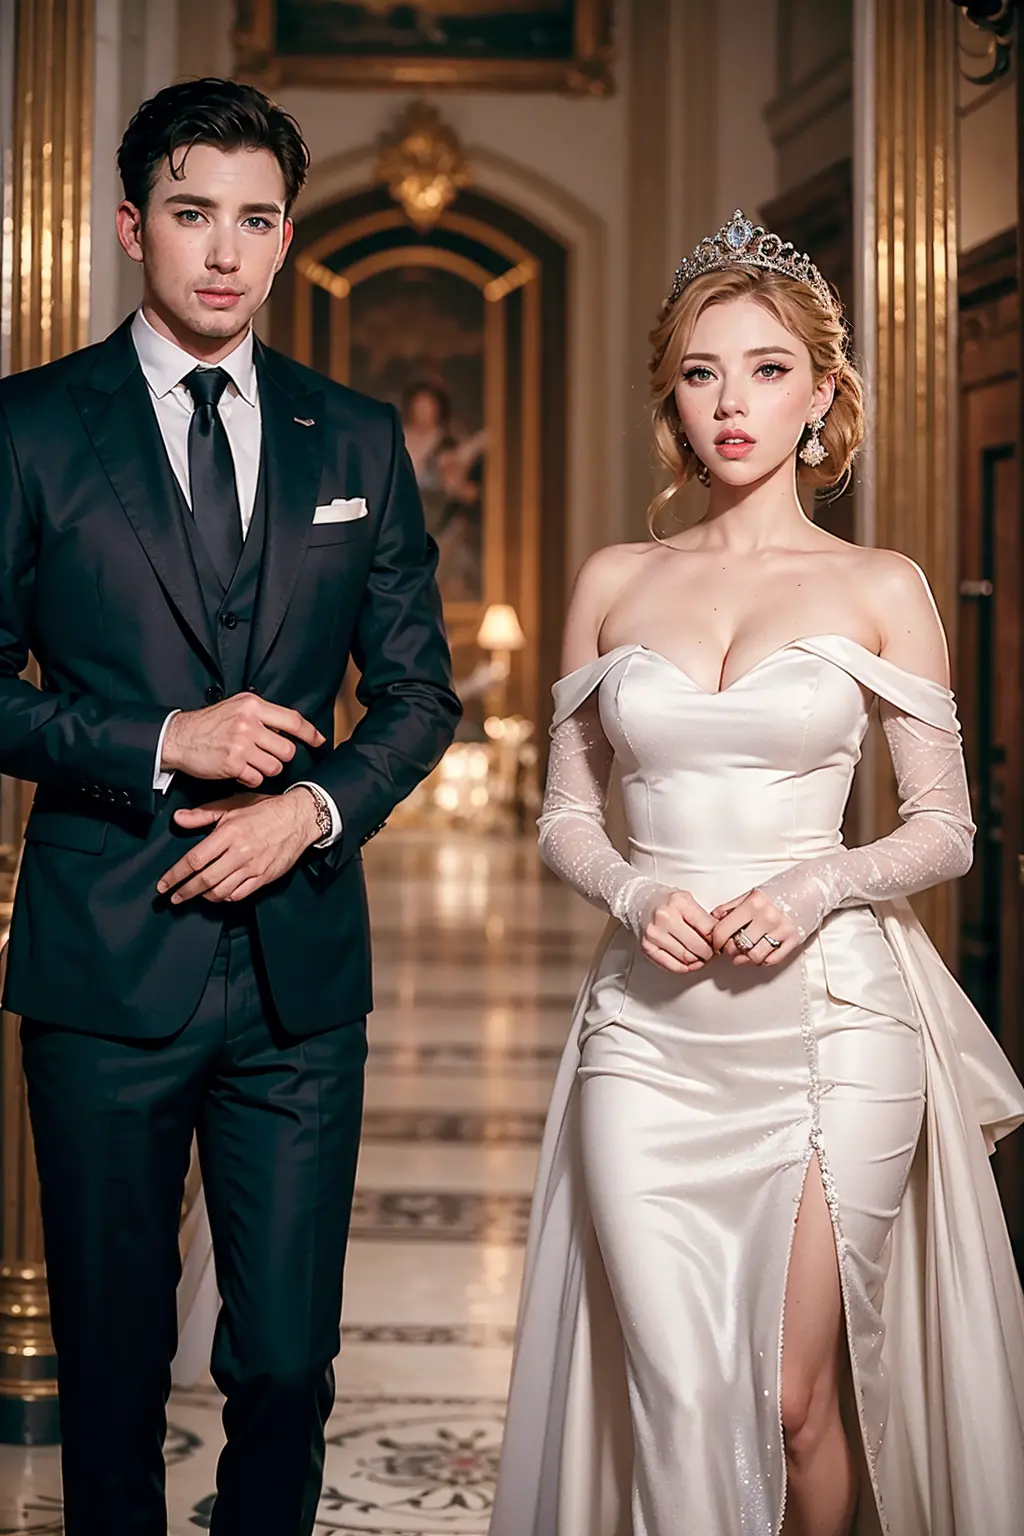 Scarlett Johansson e Chris Evans, vestidos com trajes reais deslumbrantes, depict royalty in a magnificent scene. Their clothes ...